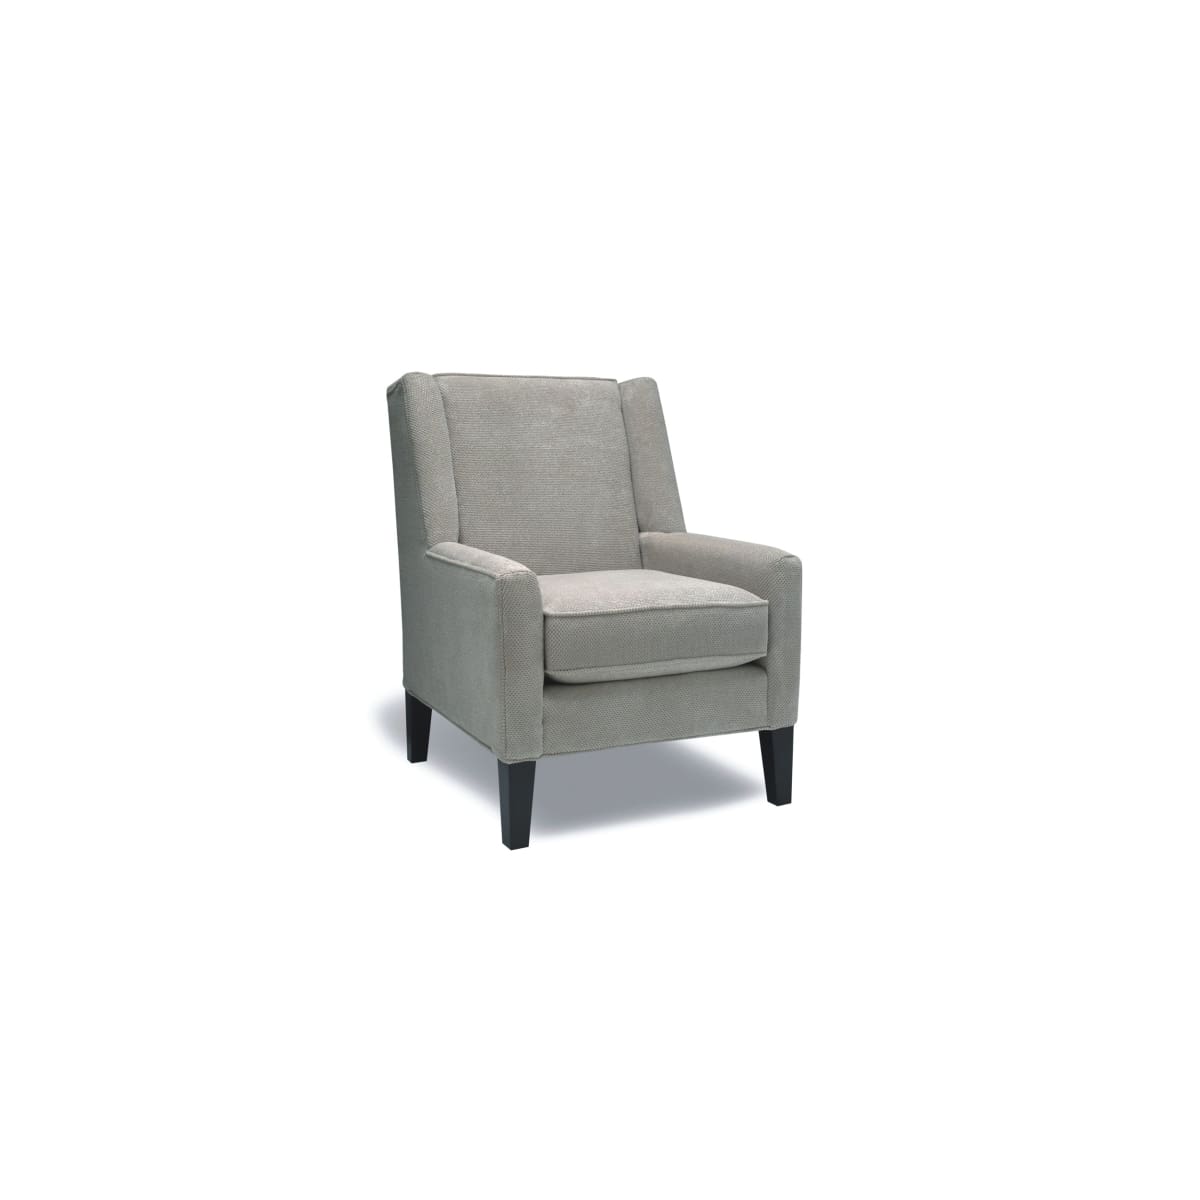 Klik Accent Chair - 41x34x30 - accent chairs